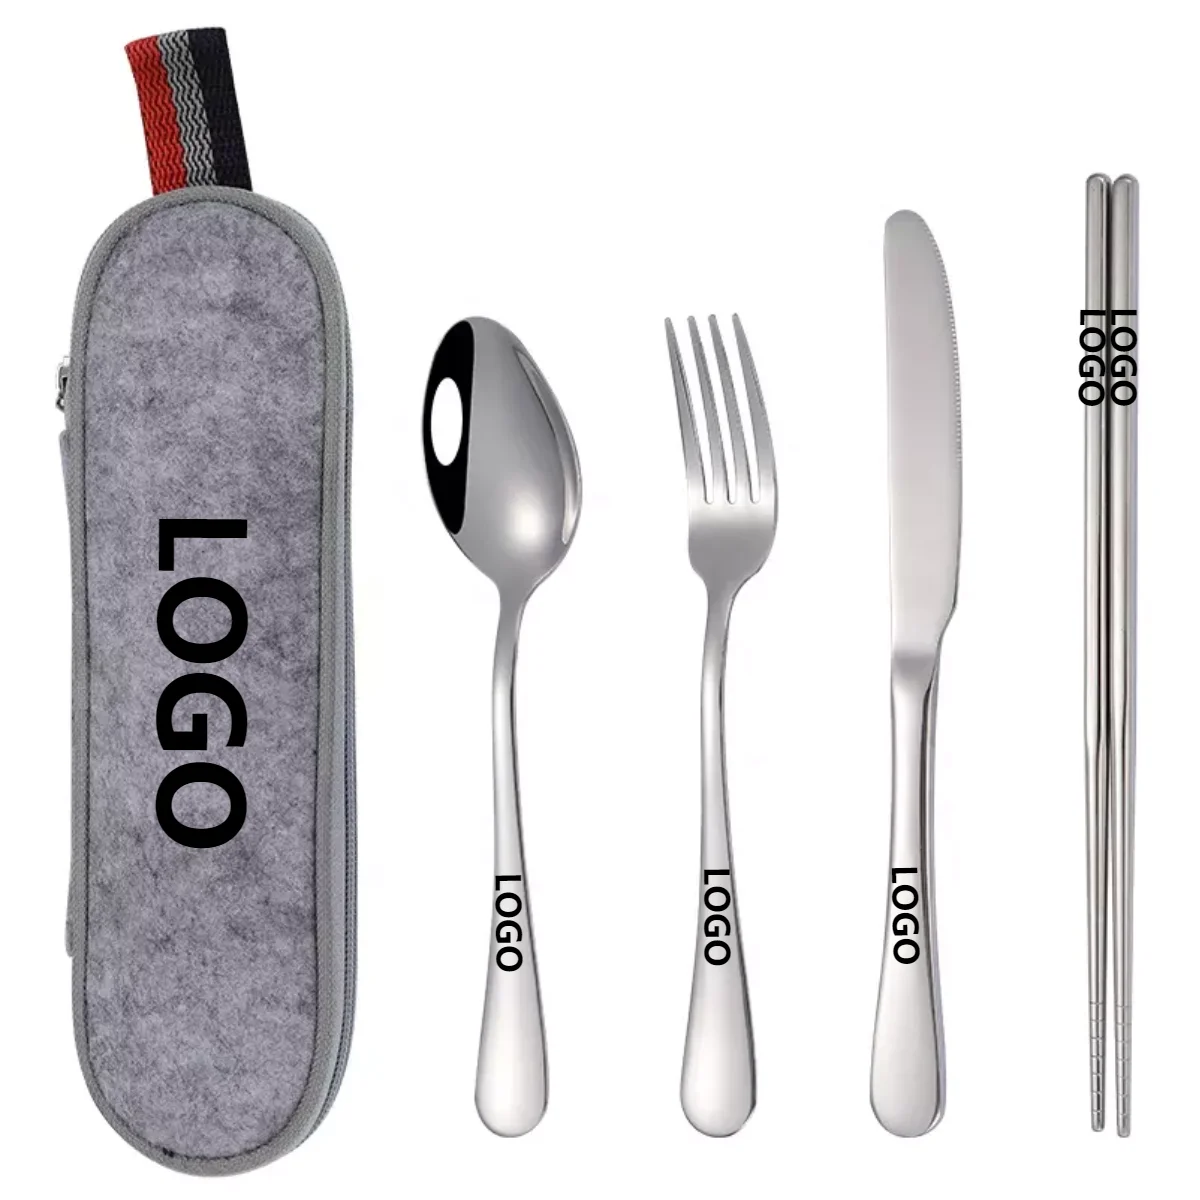 Hot Portable Tableware Case For Cutlery Chopsticks Spoon Fork Bag Holder Travel